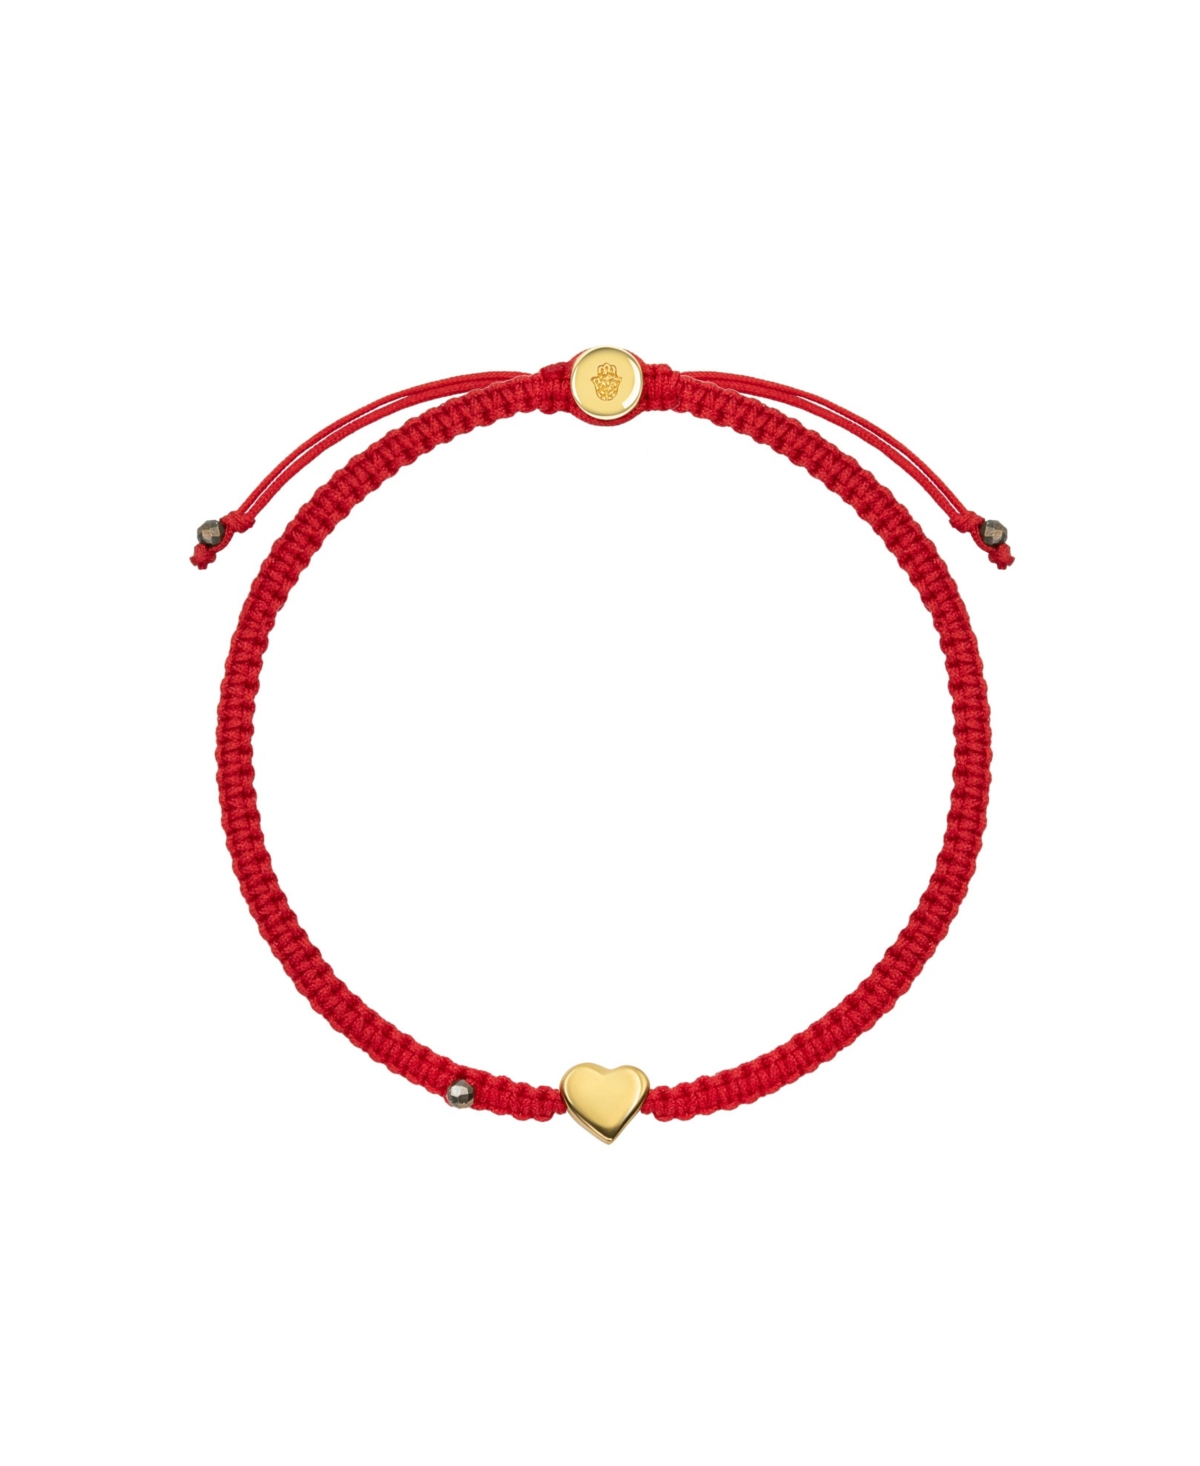 Enchanting Love - Red String Gold Heart Charm Bracelet - Red/gold